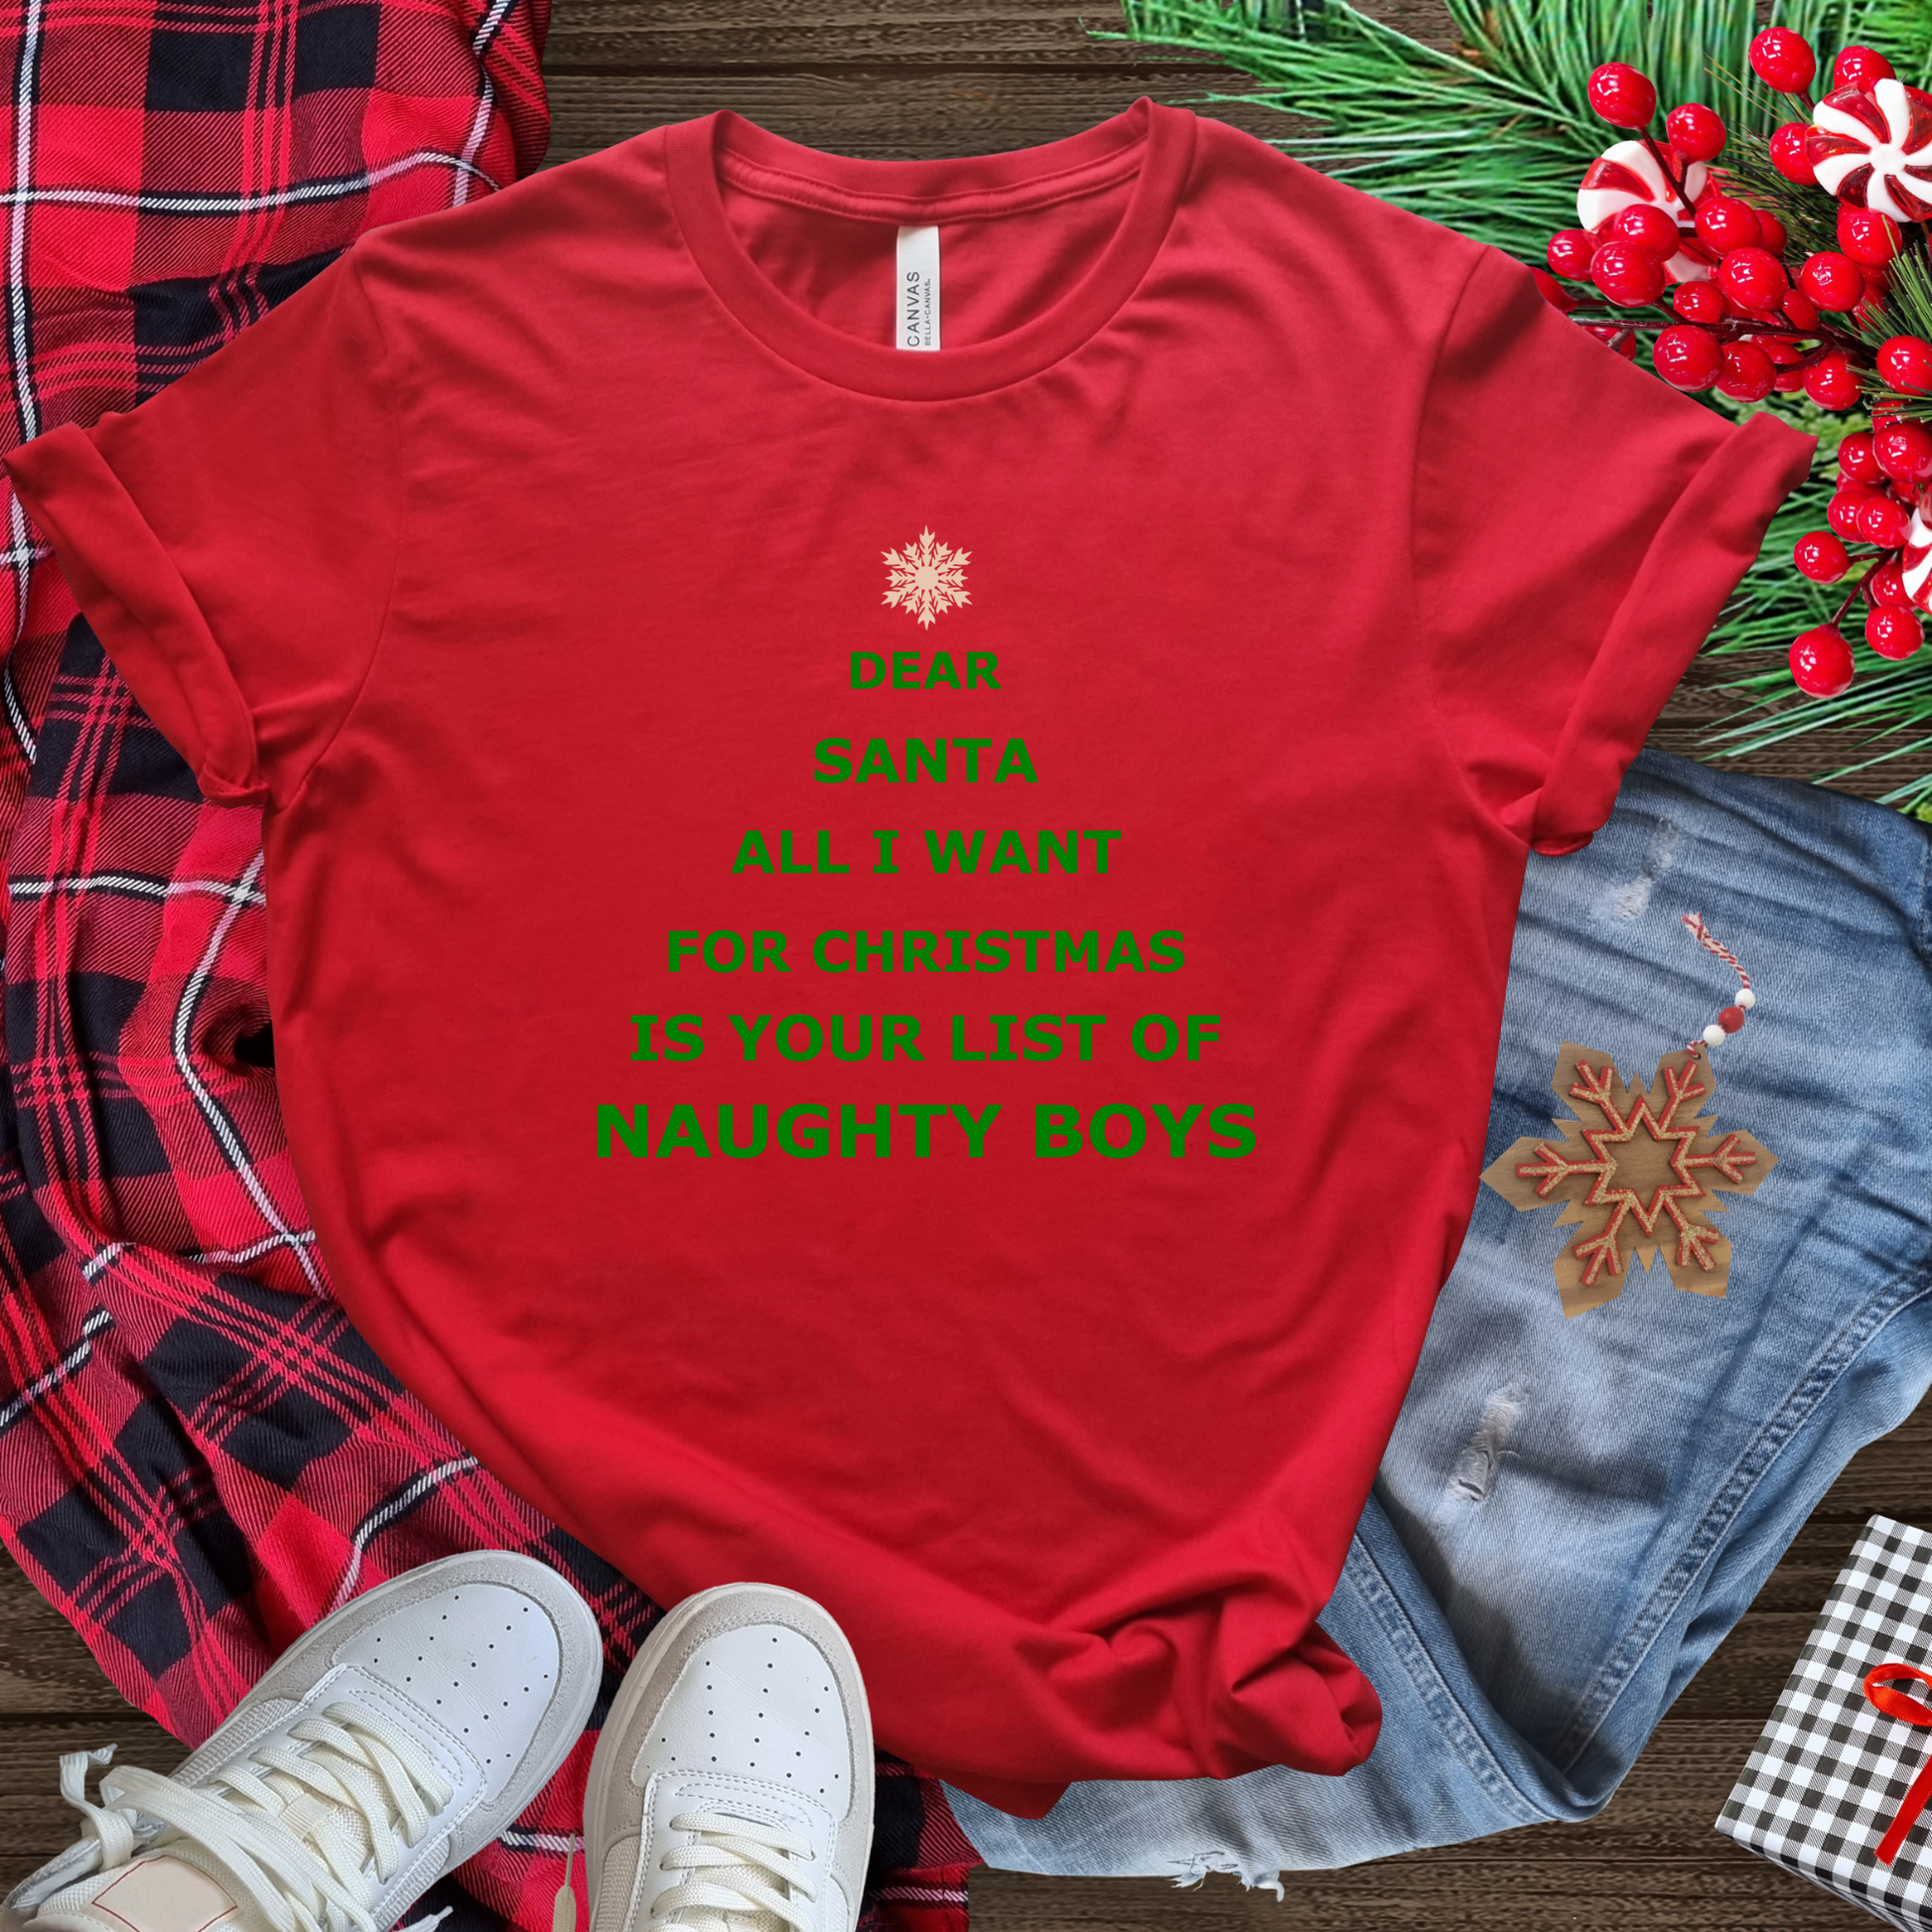 Tricou personalizat de Craciun cu mesajul Dear Santa, All I Want for Christmas is Your List of Naughty Boys